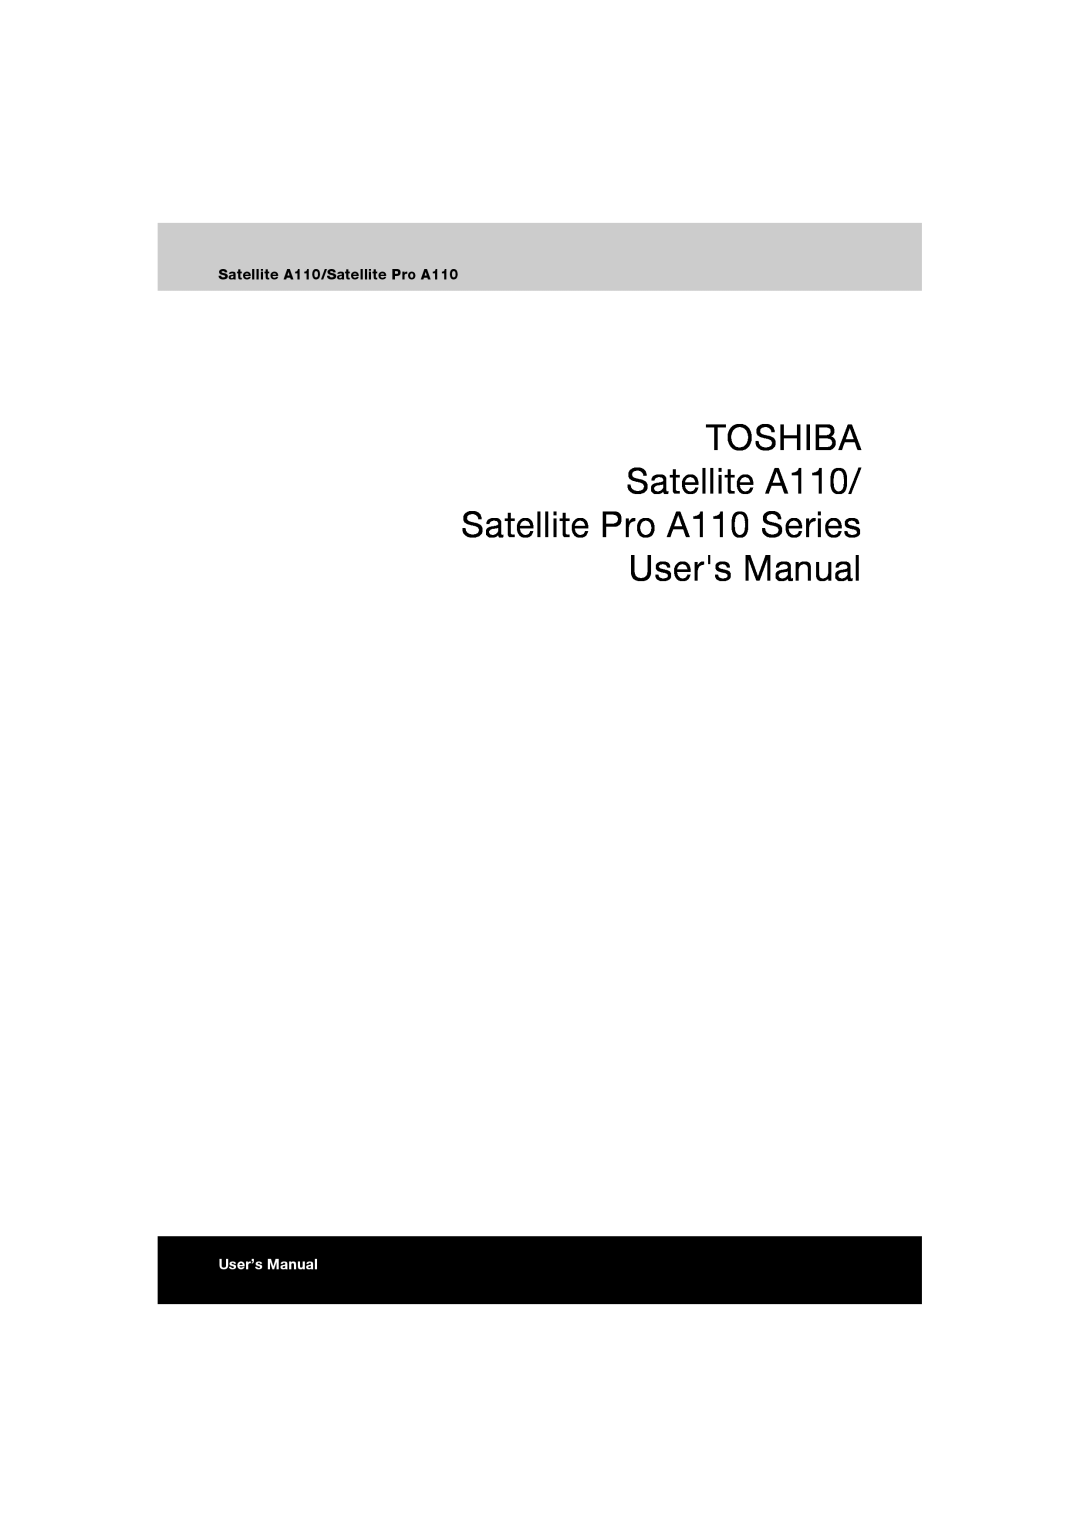 Toshiba user manual TOSHIBA Satellite A110 Satellite Pro A110 Series Users Manual, Satellite A110/Satellite Pro A110 